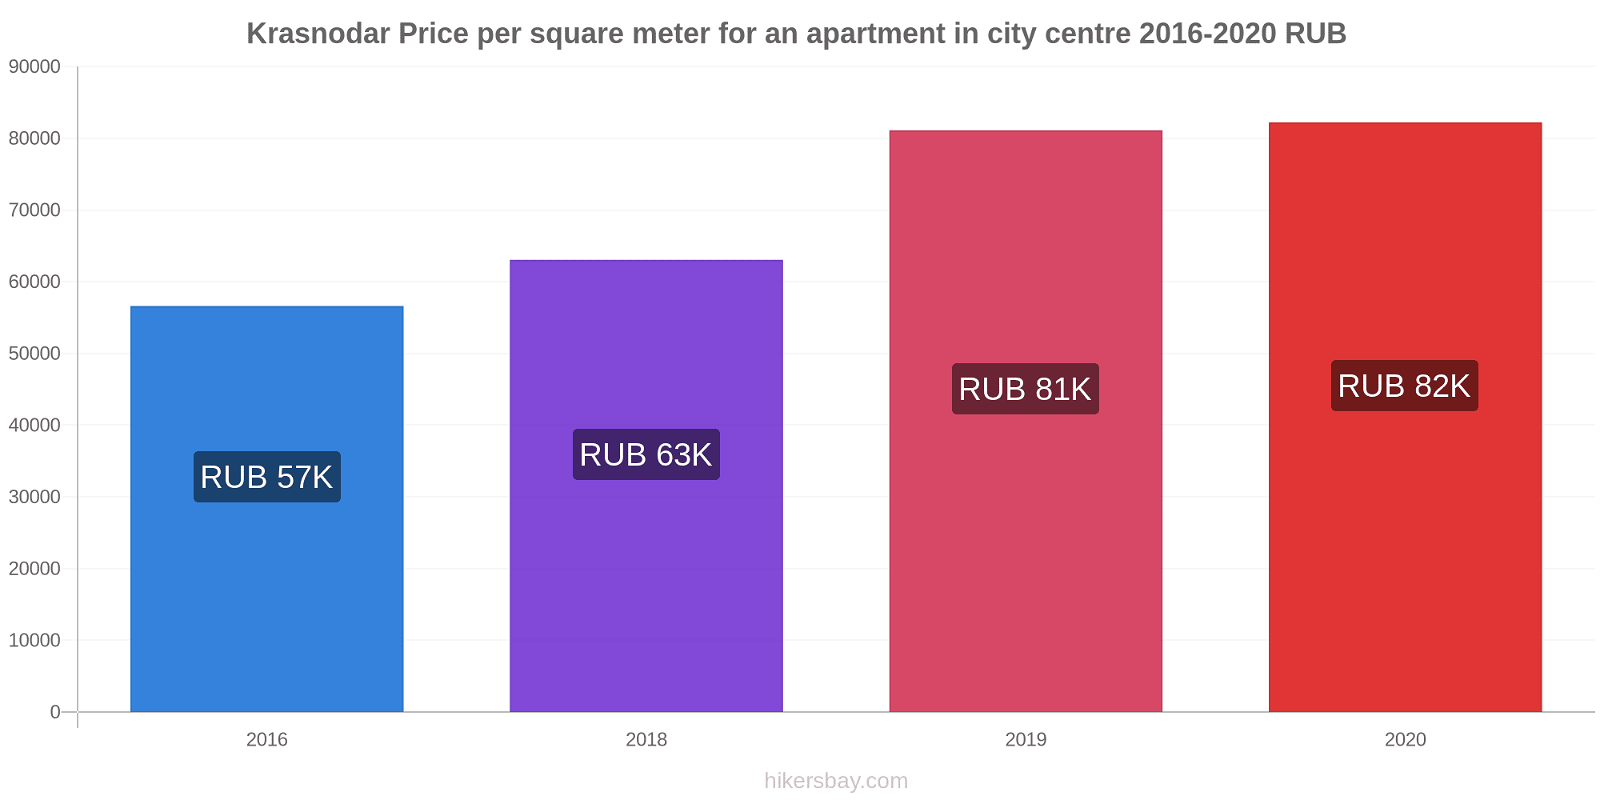 Krasnodar price changes Price per square meter for an apartment in city centre hikersbay.com